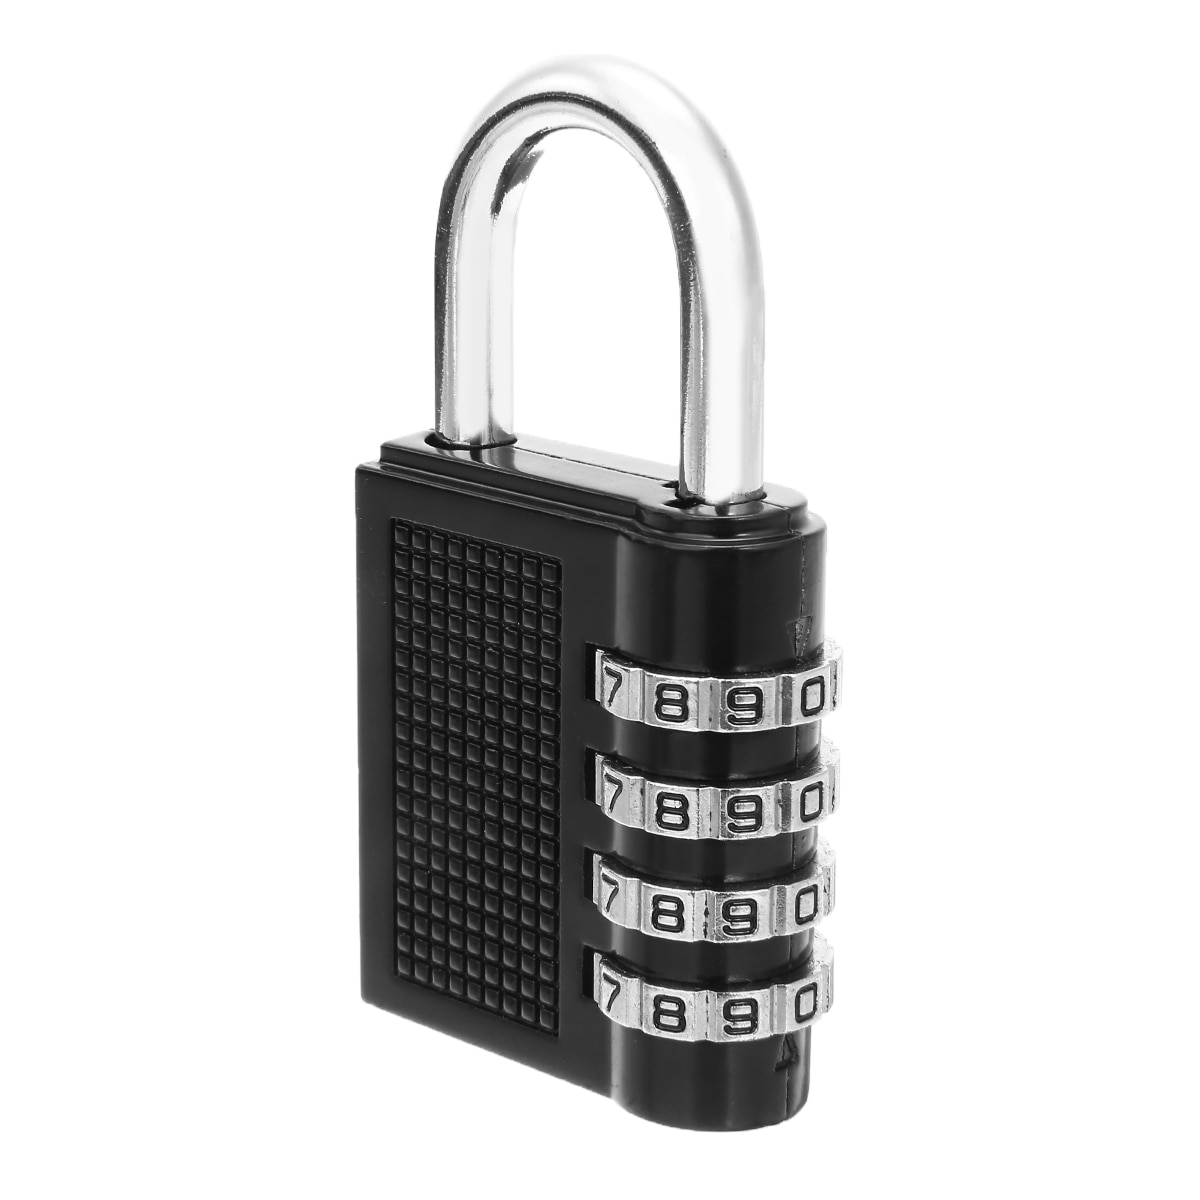 80*43*14mm Heavy Duty 4 Dial Digit Combination Lock Weatherproof Security Padlock Outdoor Gym Safely Code Lock Black